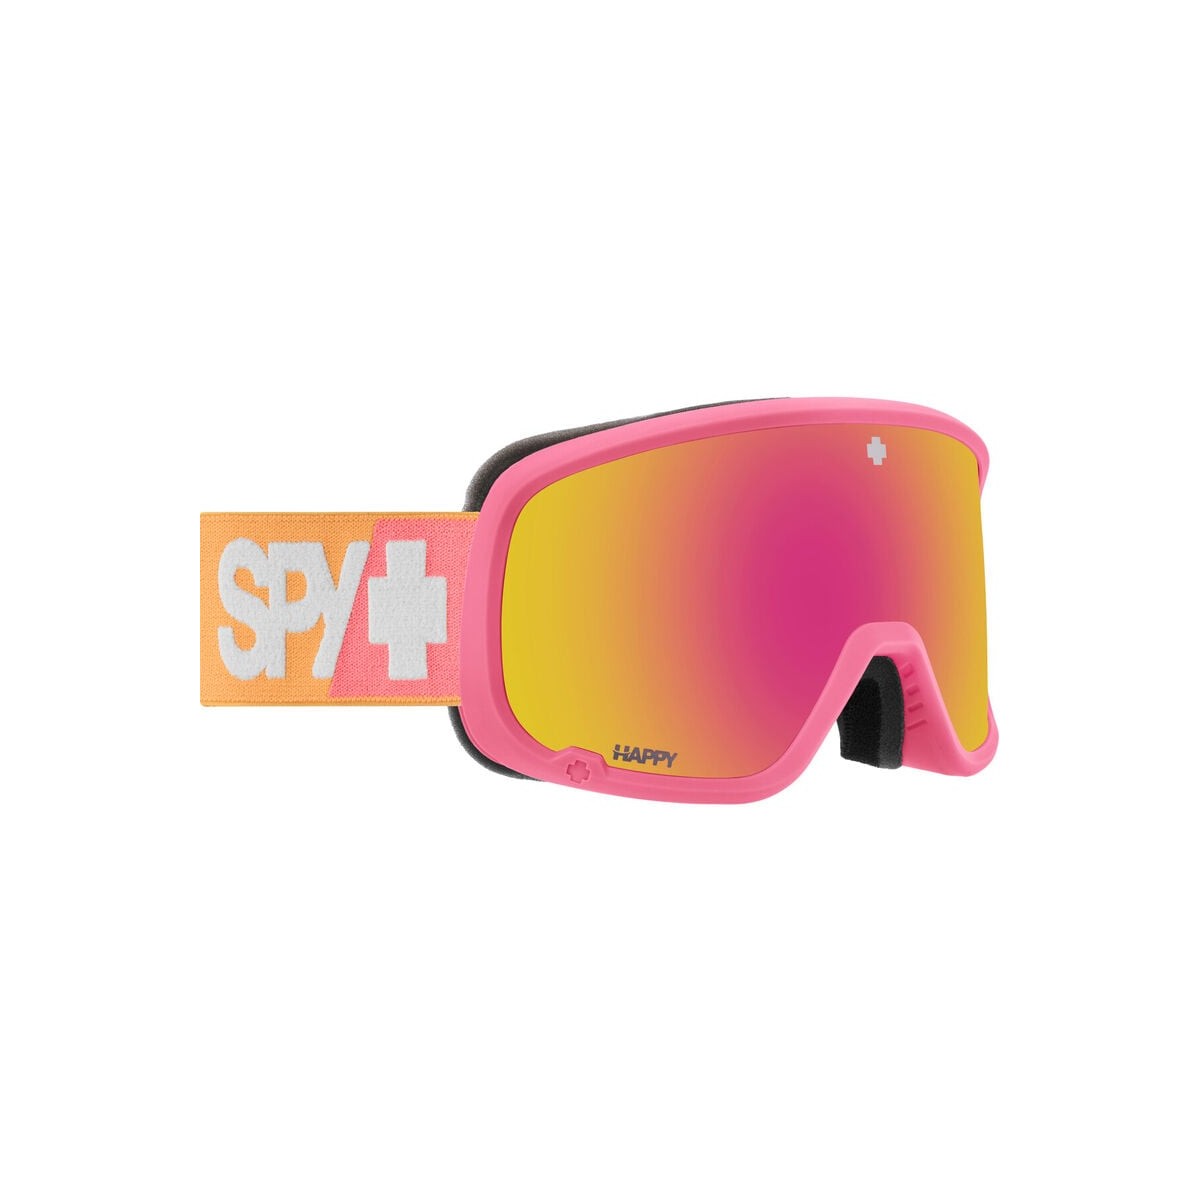 SPY MARSHALL 2.0 SNOW goggles - creamscile